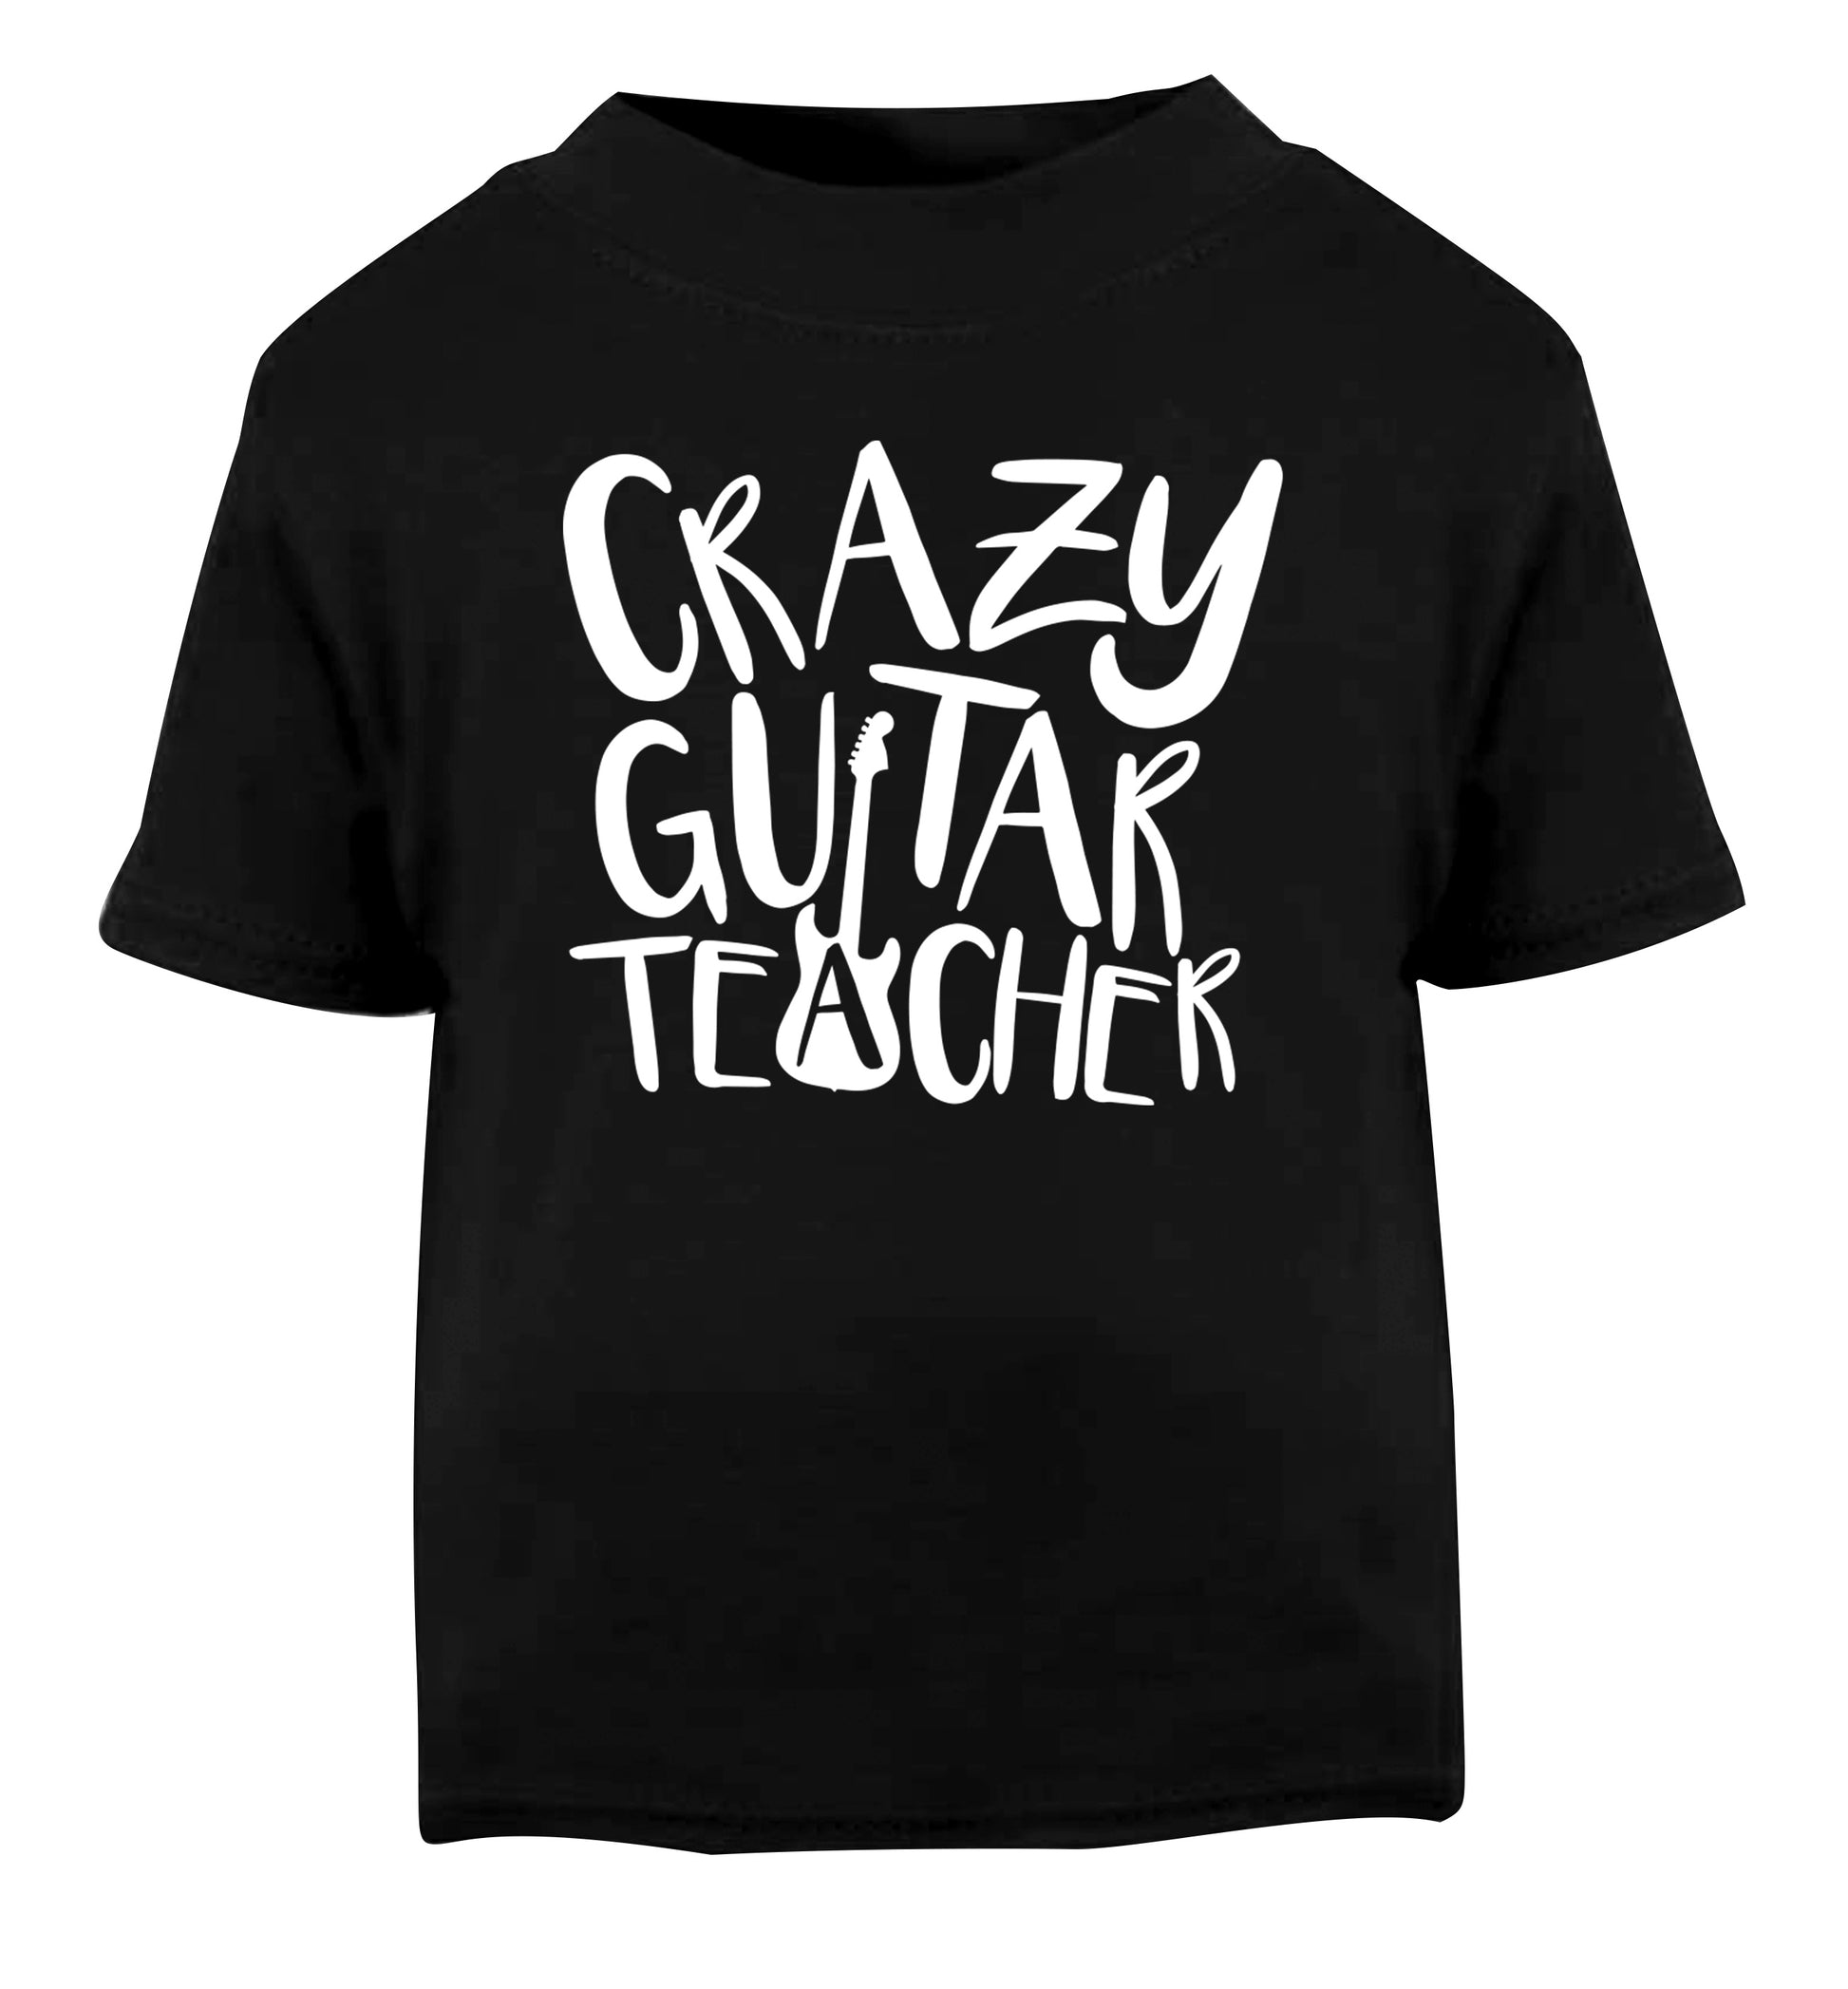 Crazy guitar teacher Black Baby Toddler Tshirt 2 years